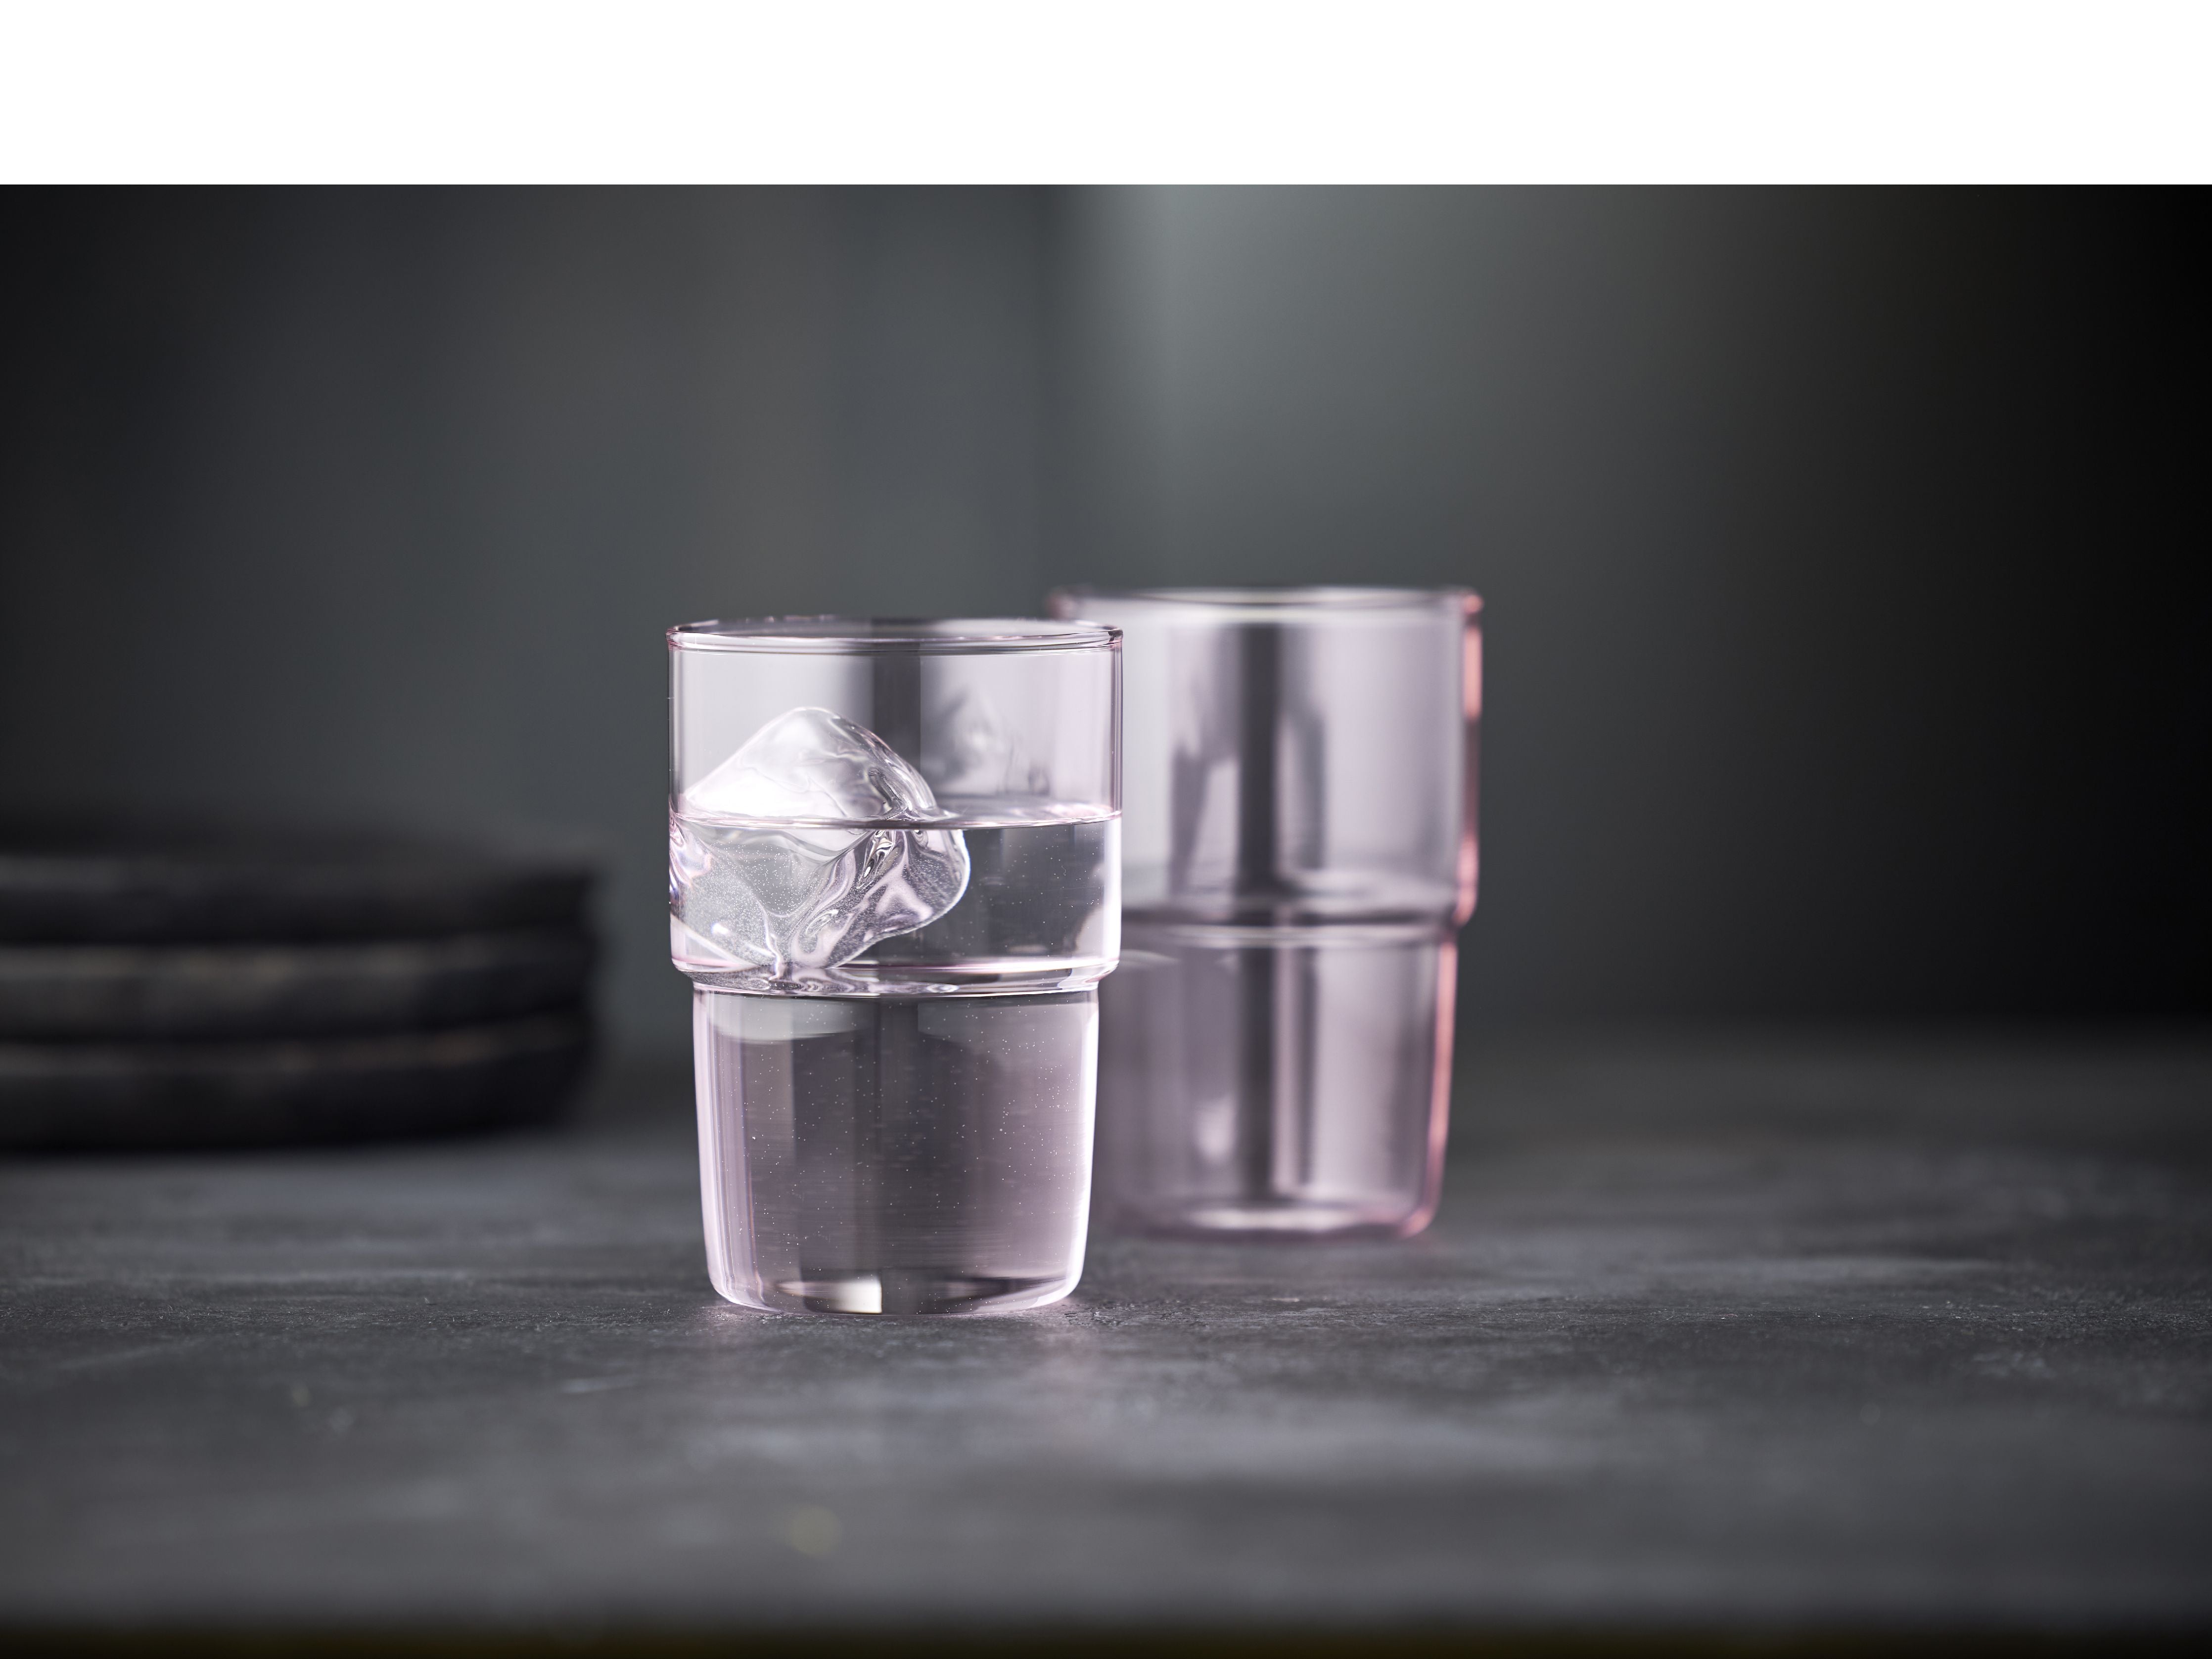 Lyngby glas torino beve di vetro 40 cl 2 pezzi, rosa